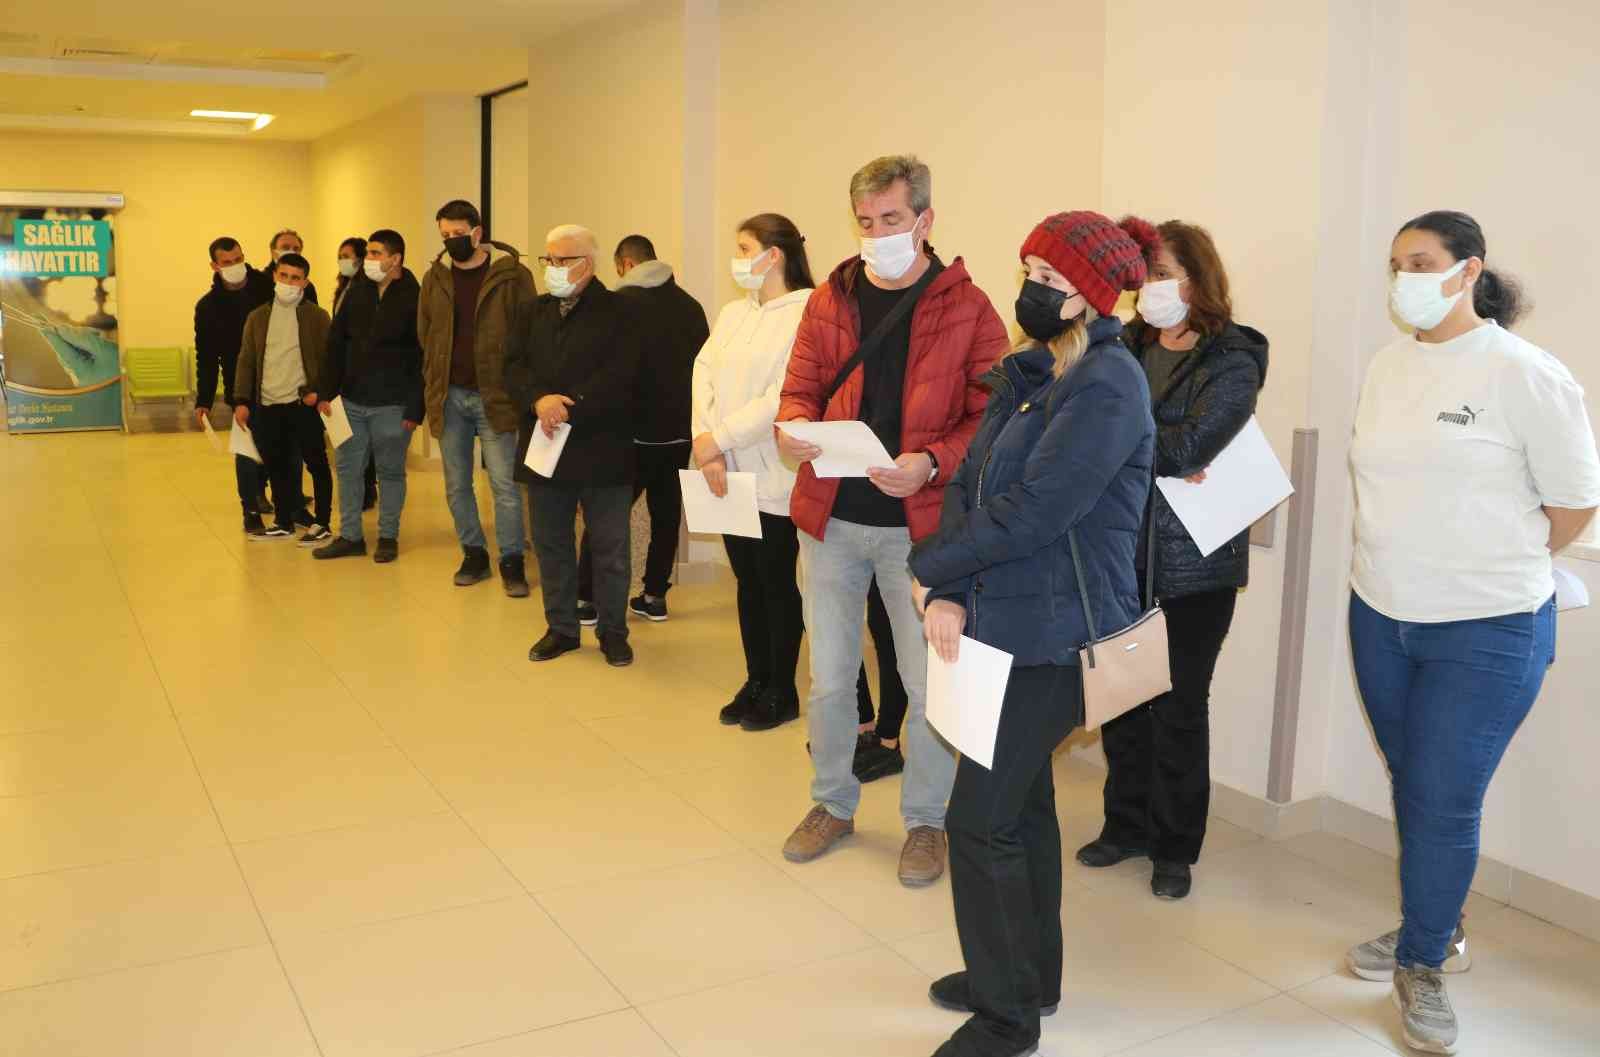 Turkovac’a yoğun ilgi: Randevuların yüzde 60’ı doldu #edirne